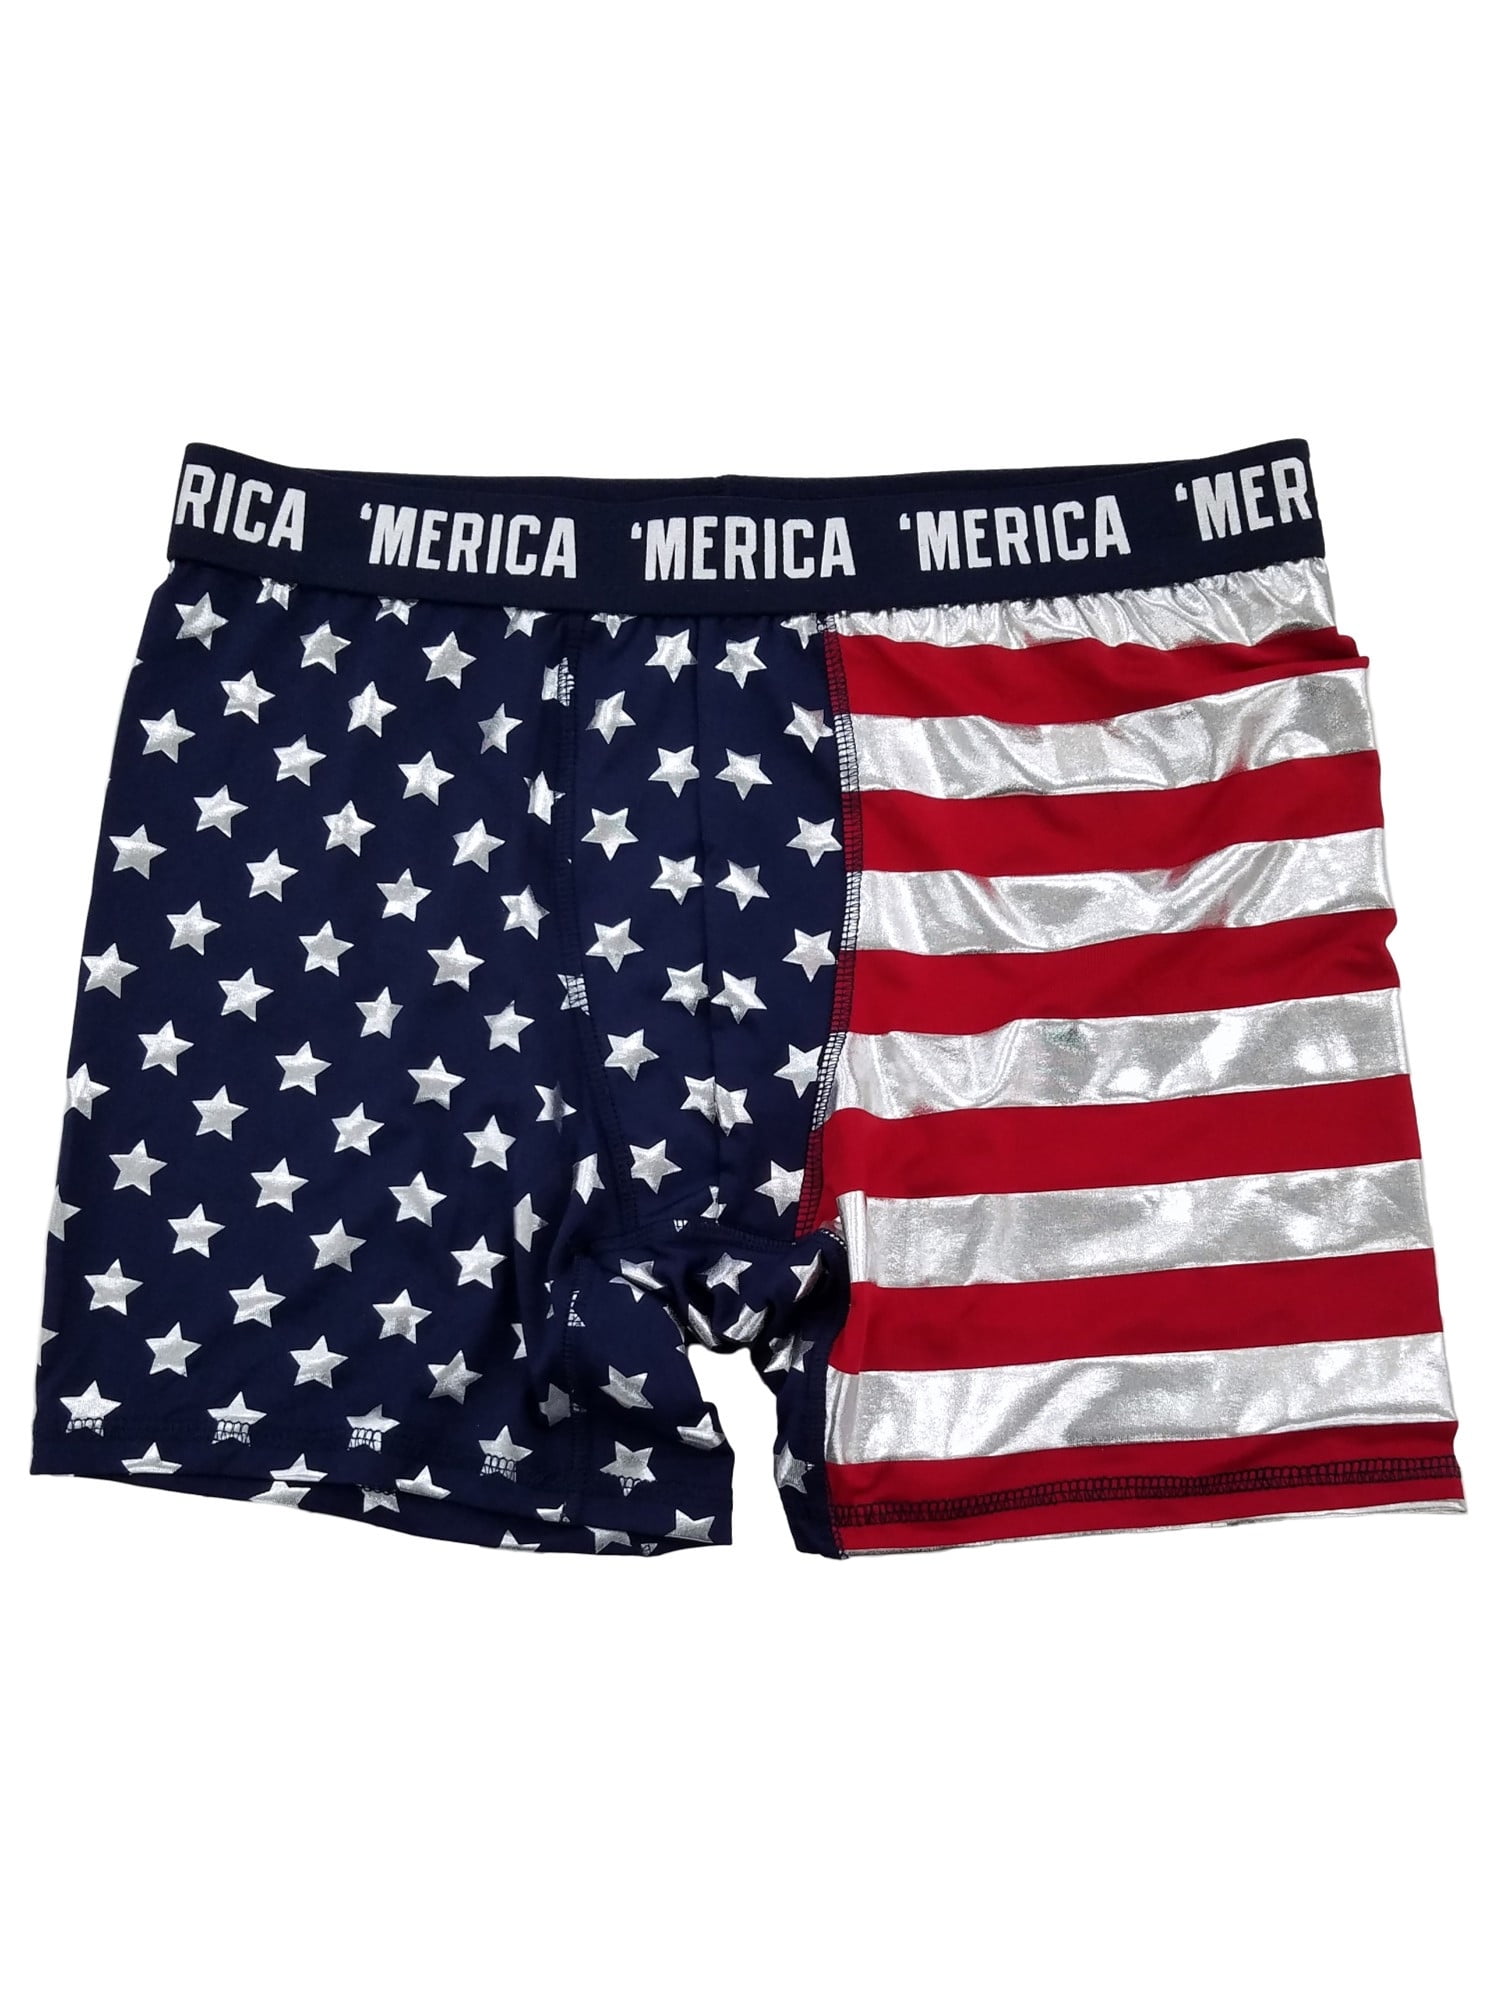 Mens 'Merica USA Patriot American Flag Lamé Underwear Boxer Briefs Small